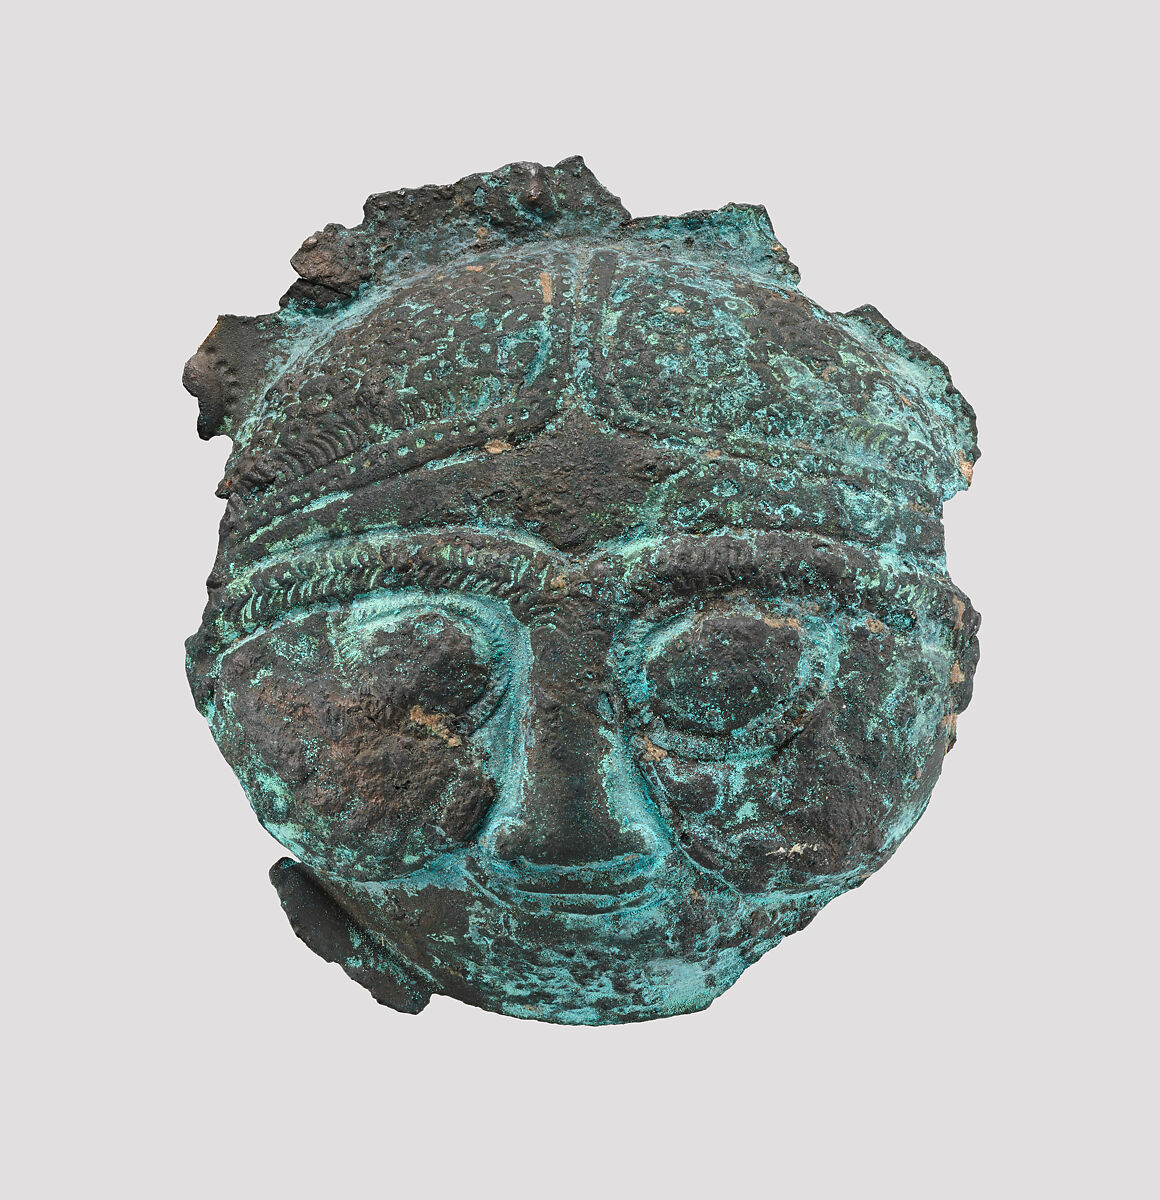 Boss from a disc-headed pin, Bronze, Iran 